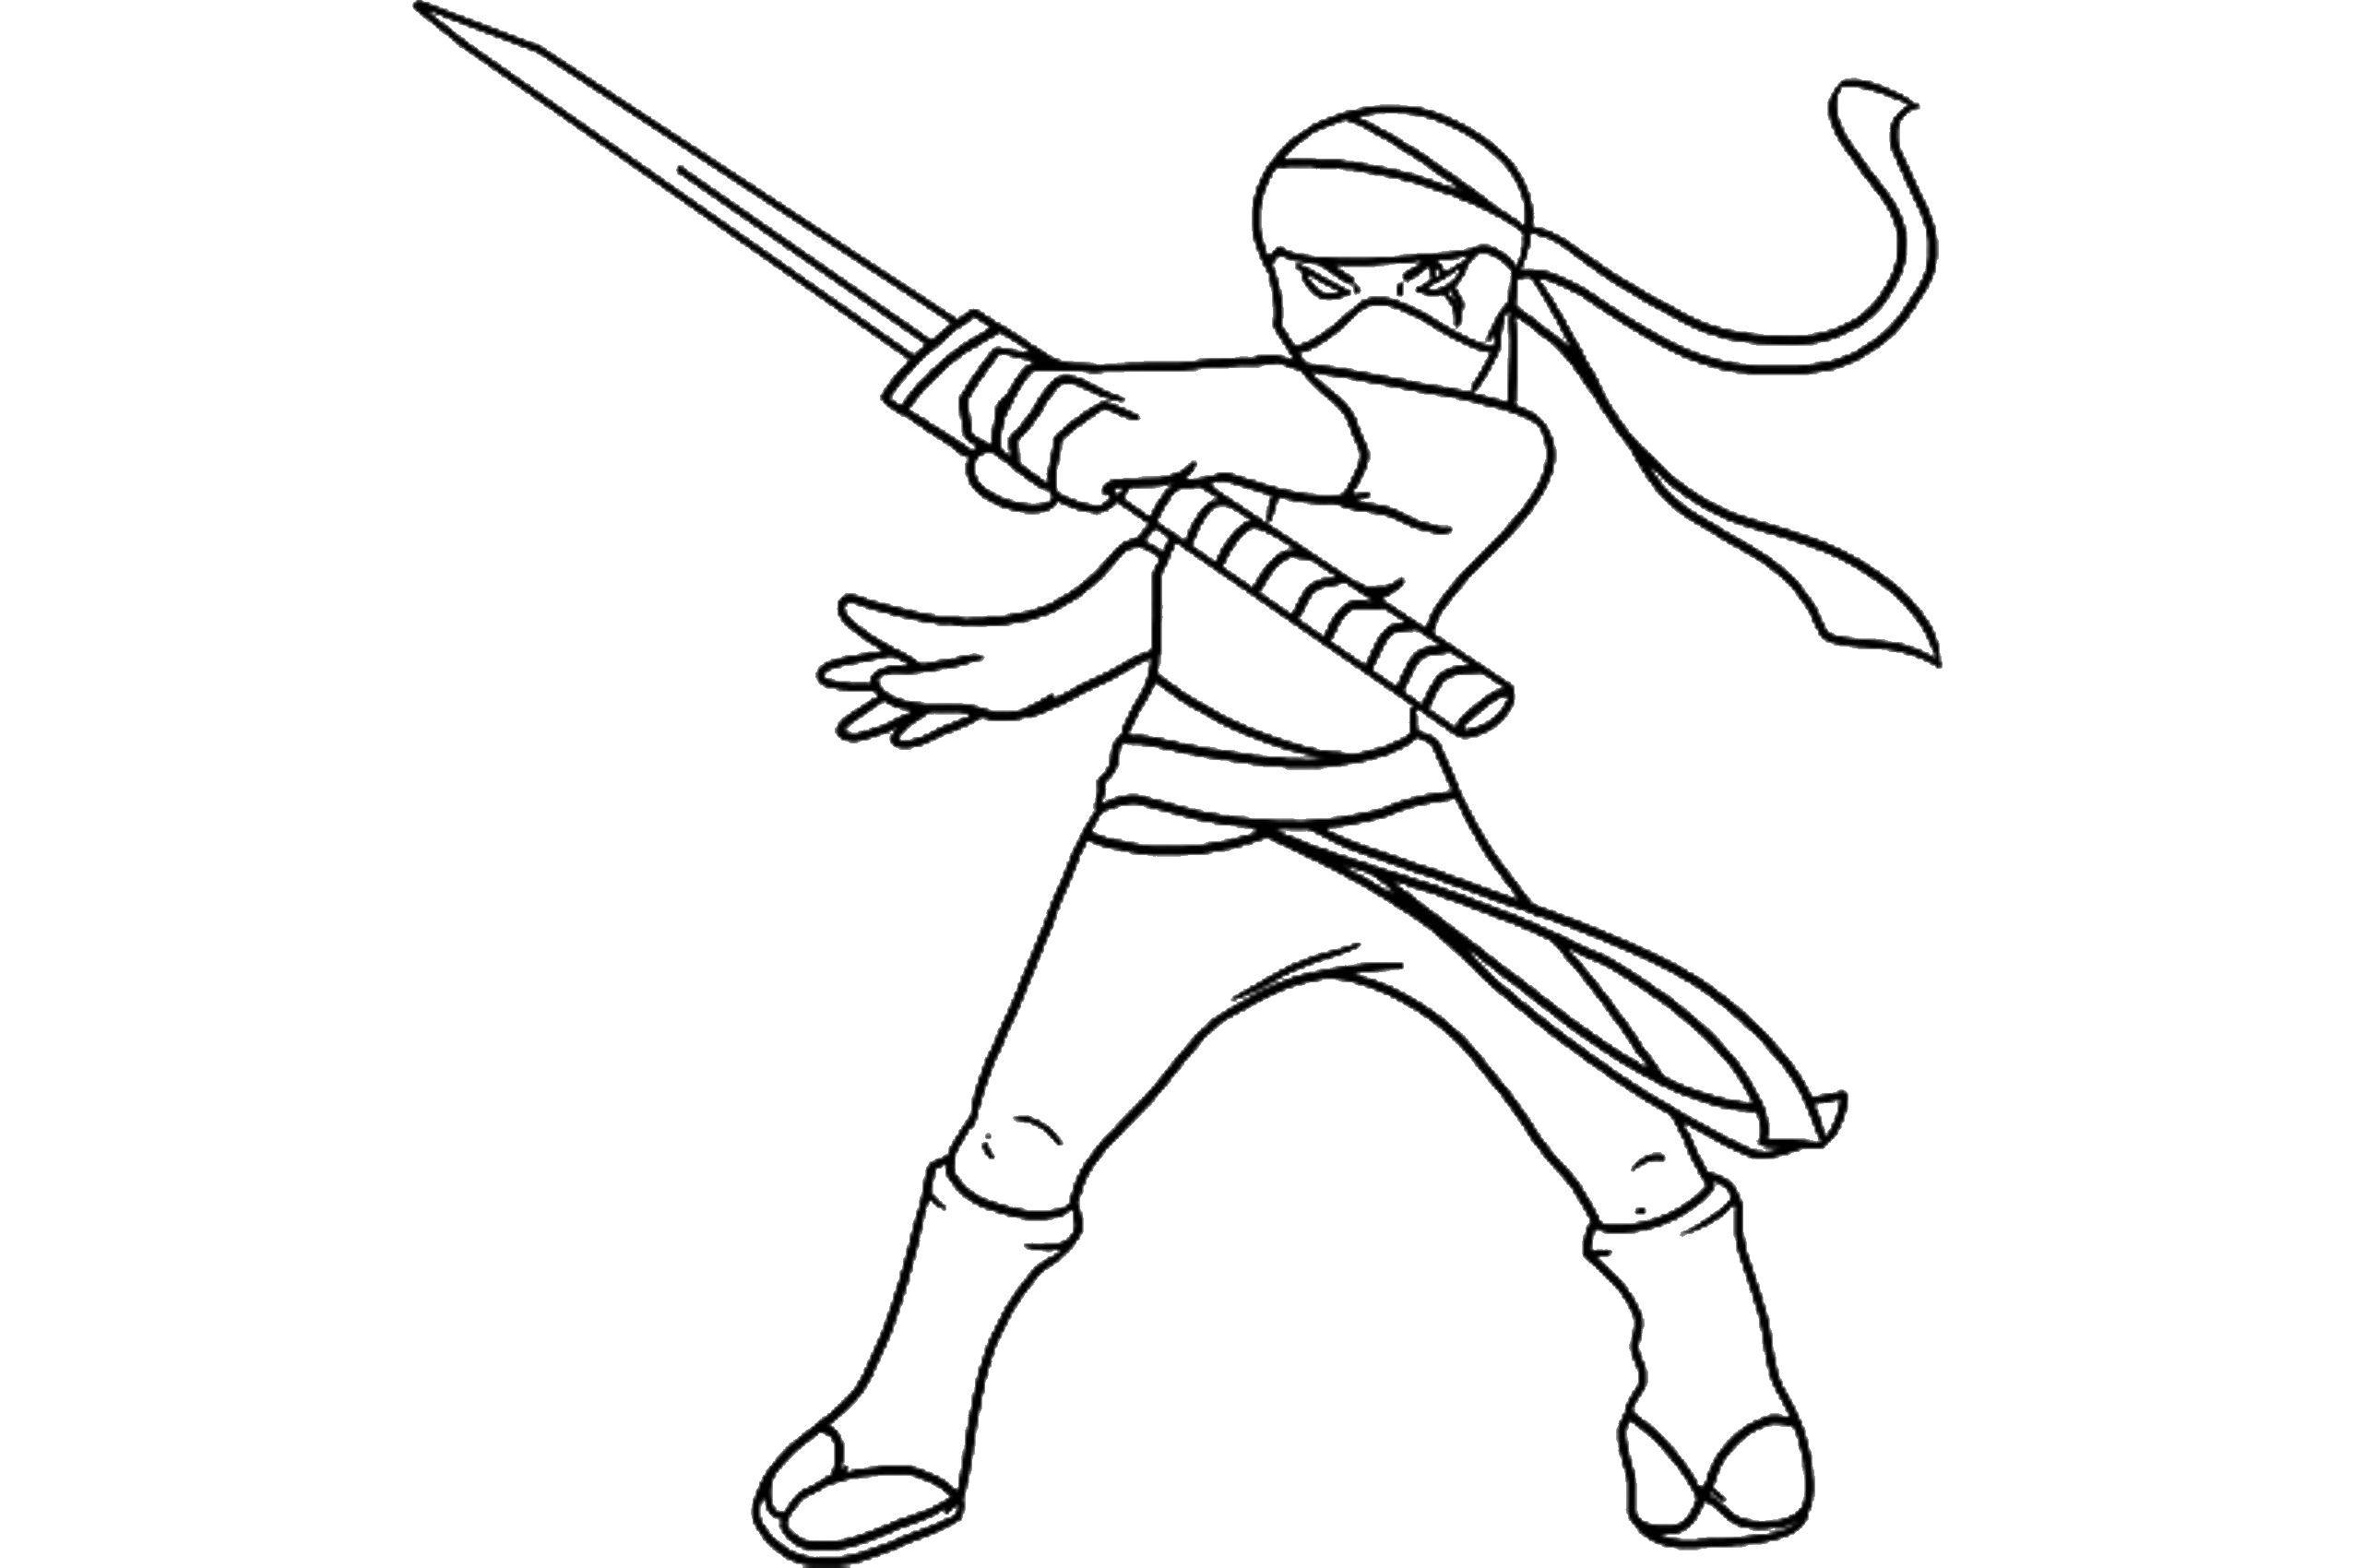 Название: Раскраска Ниндзя. Категория: ниндзя. Теги: самурай, ниндзя, меч.